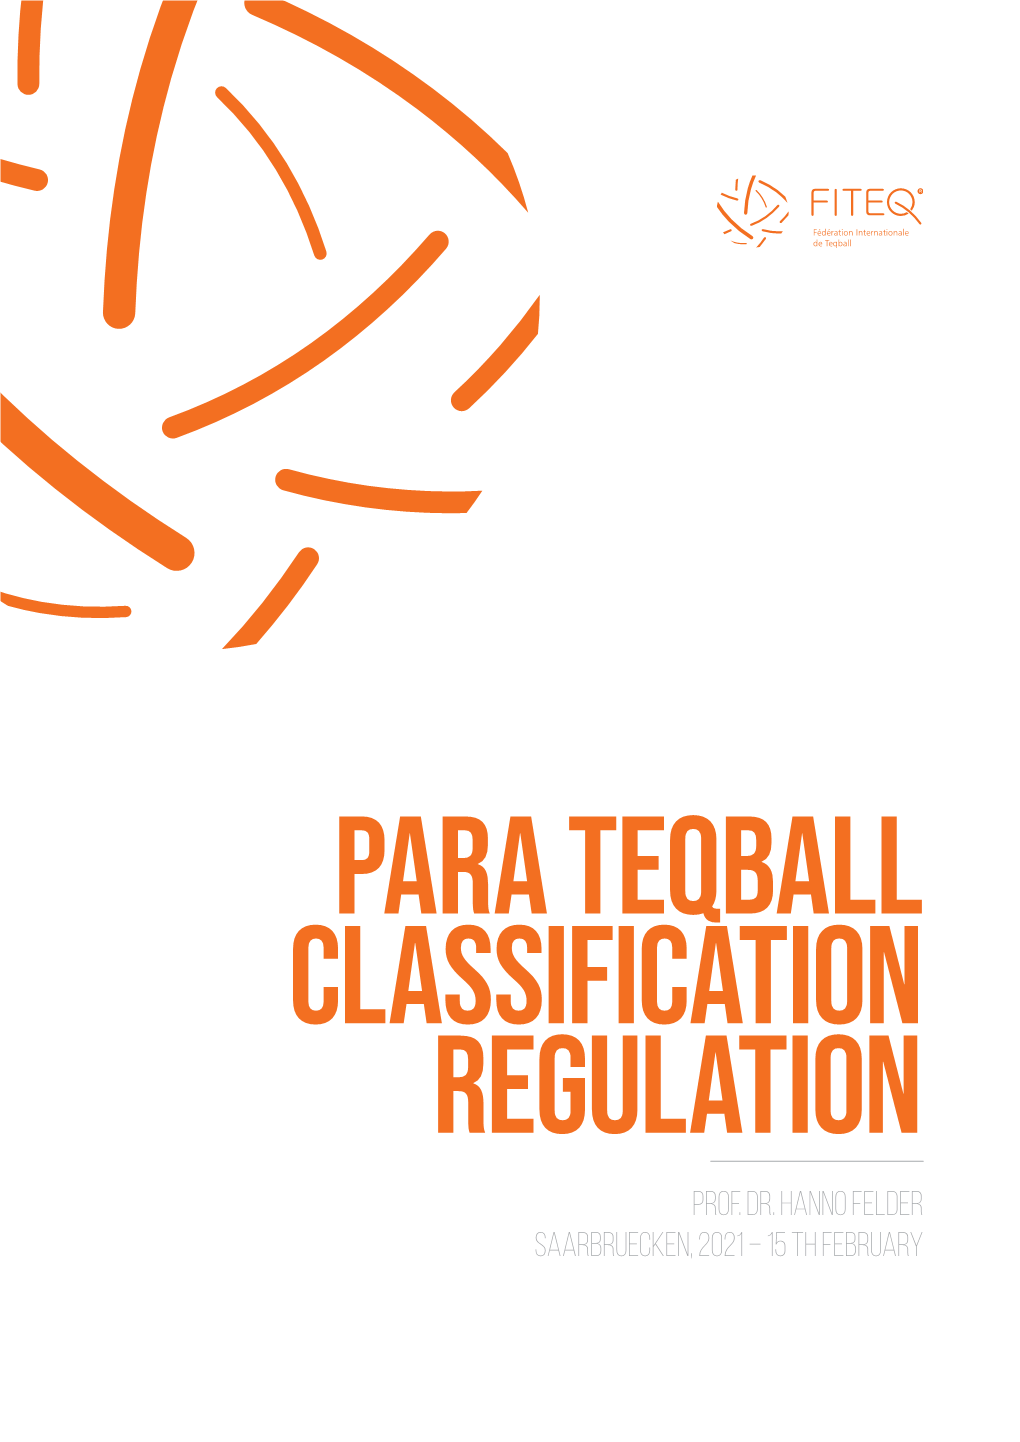 Para Teqball Classification Regulation Prof